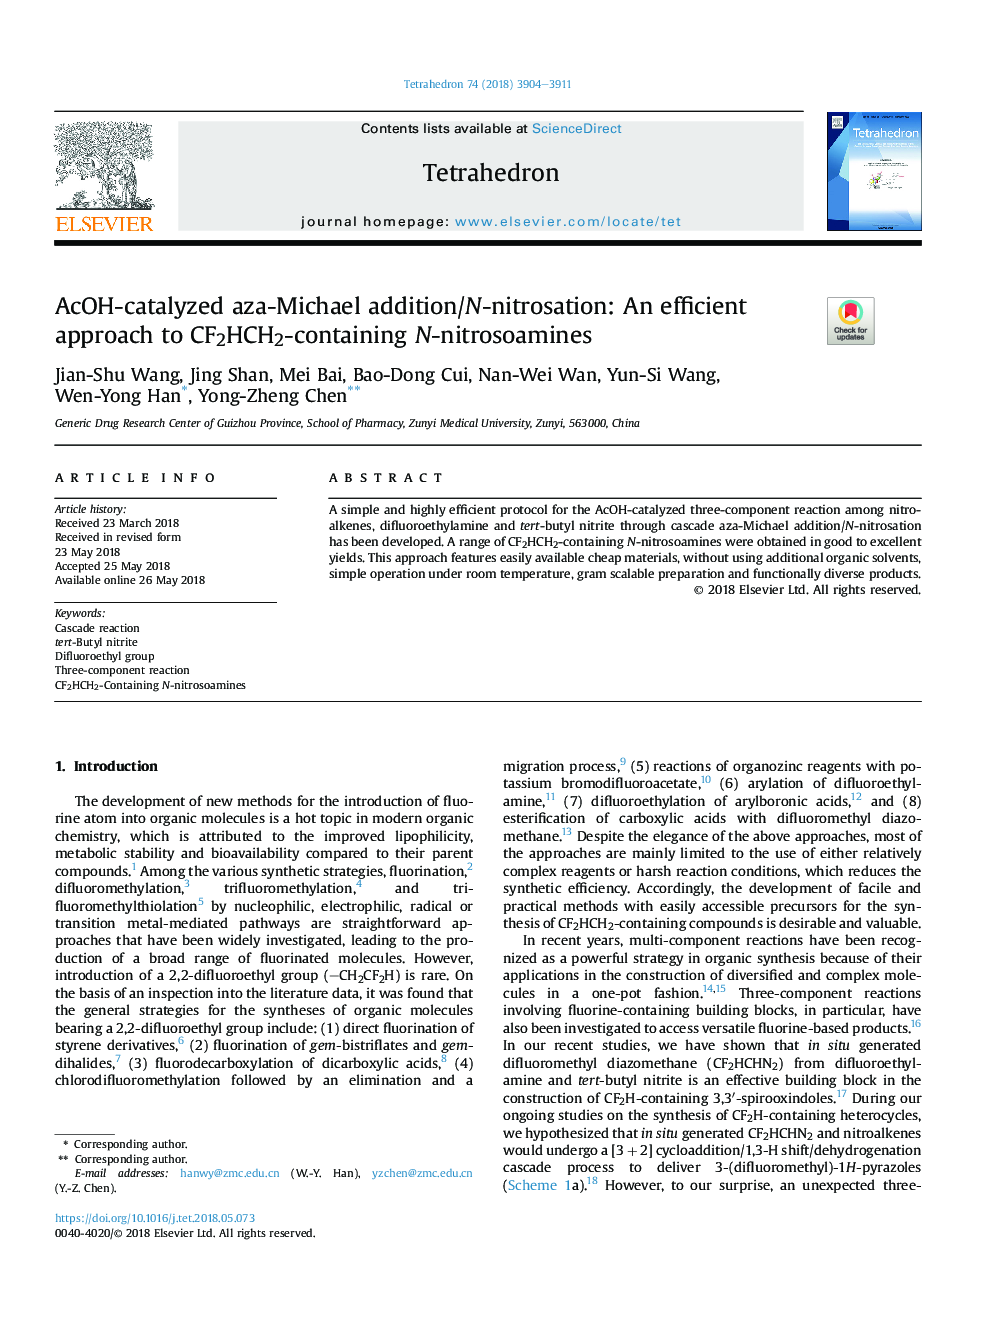 AcOH-catalyzed aza-Michael addition/N-nitrosation: An efficient approach to CF2HCH2-containing N-nitrosoamines